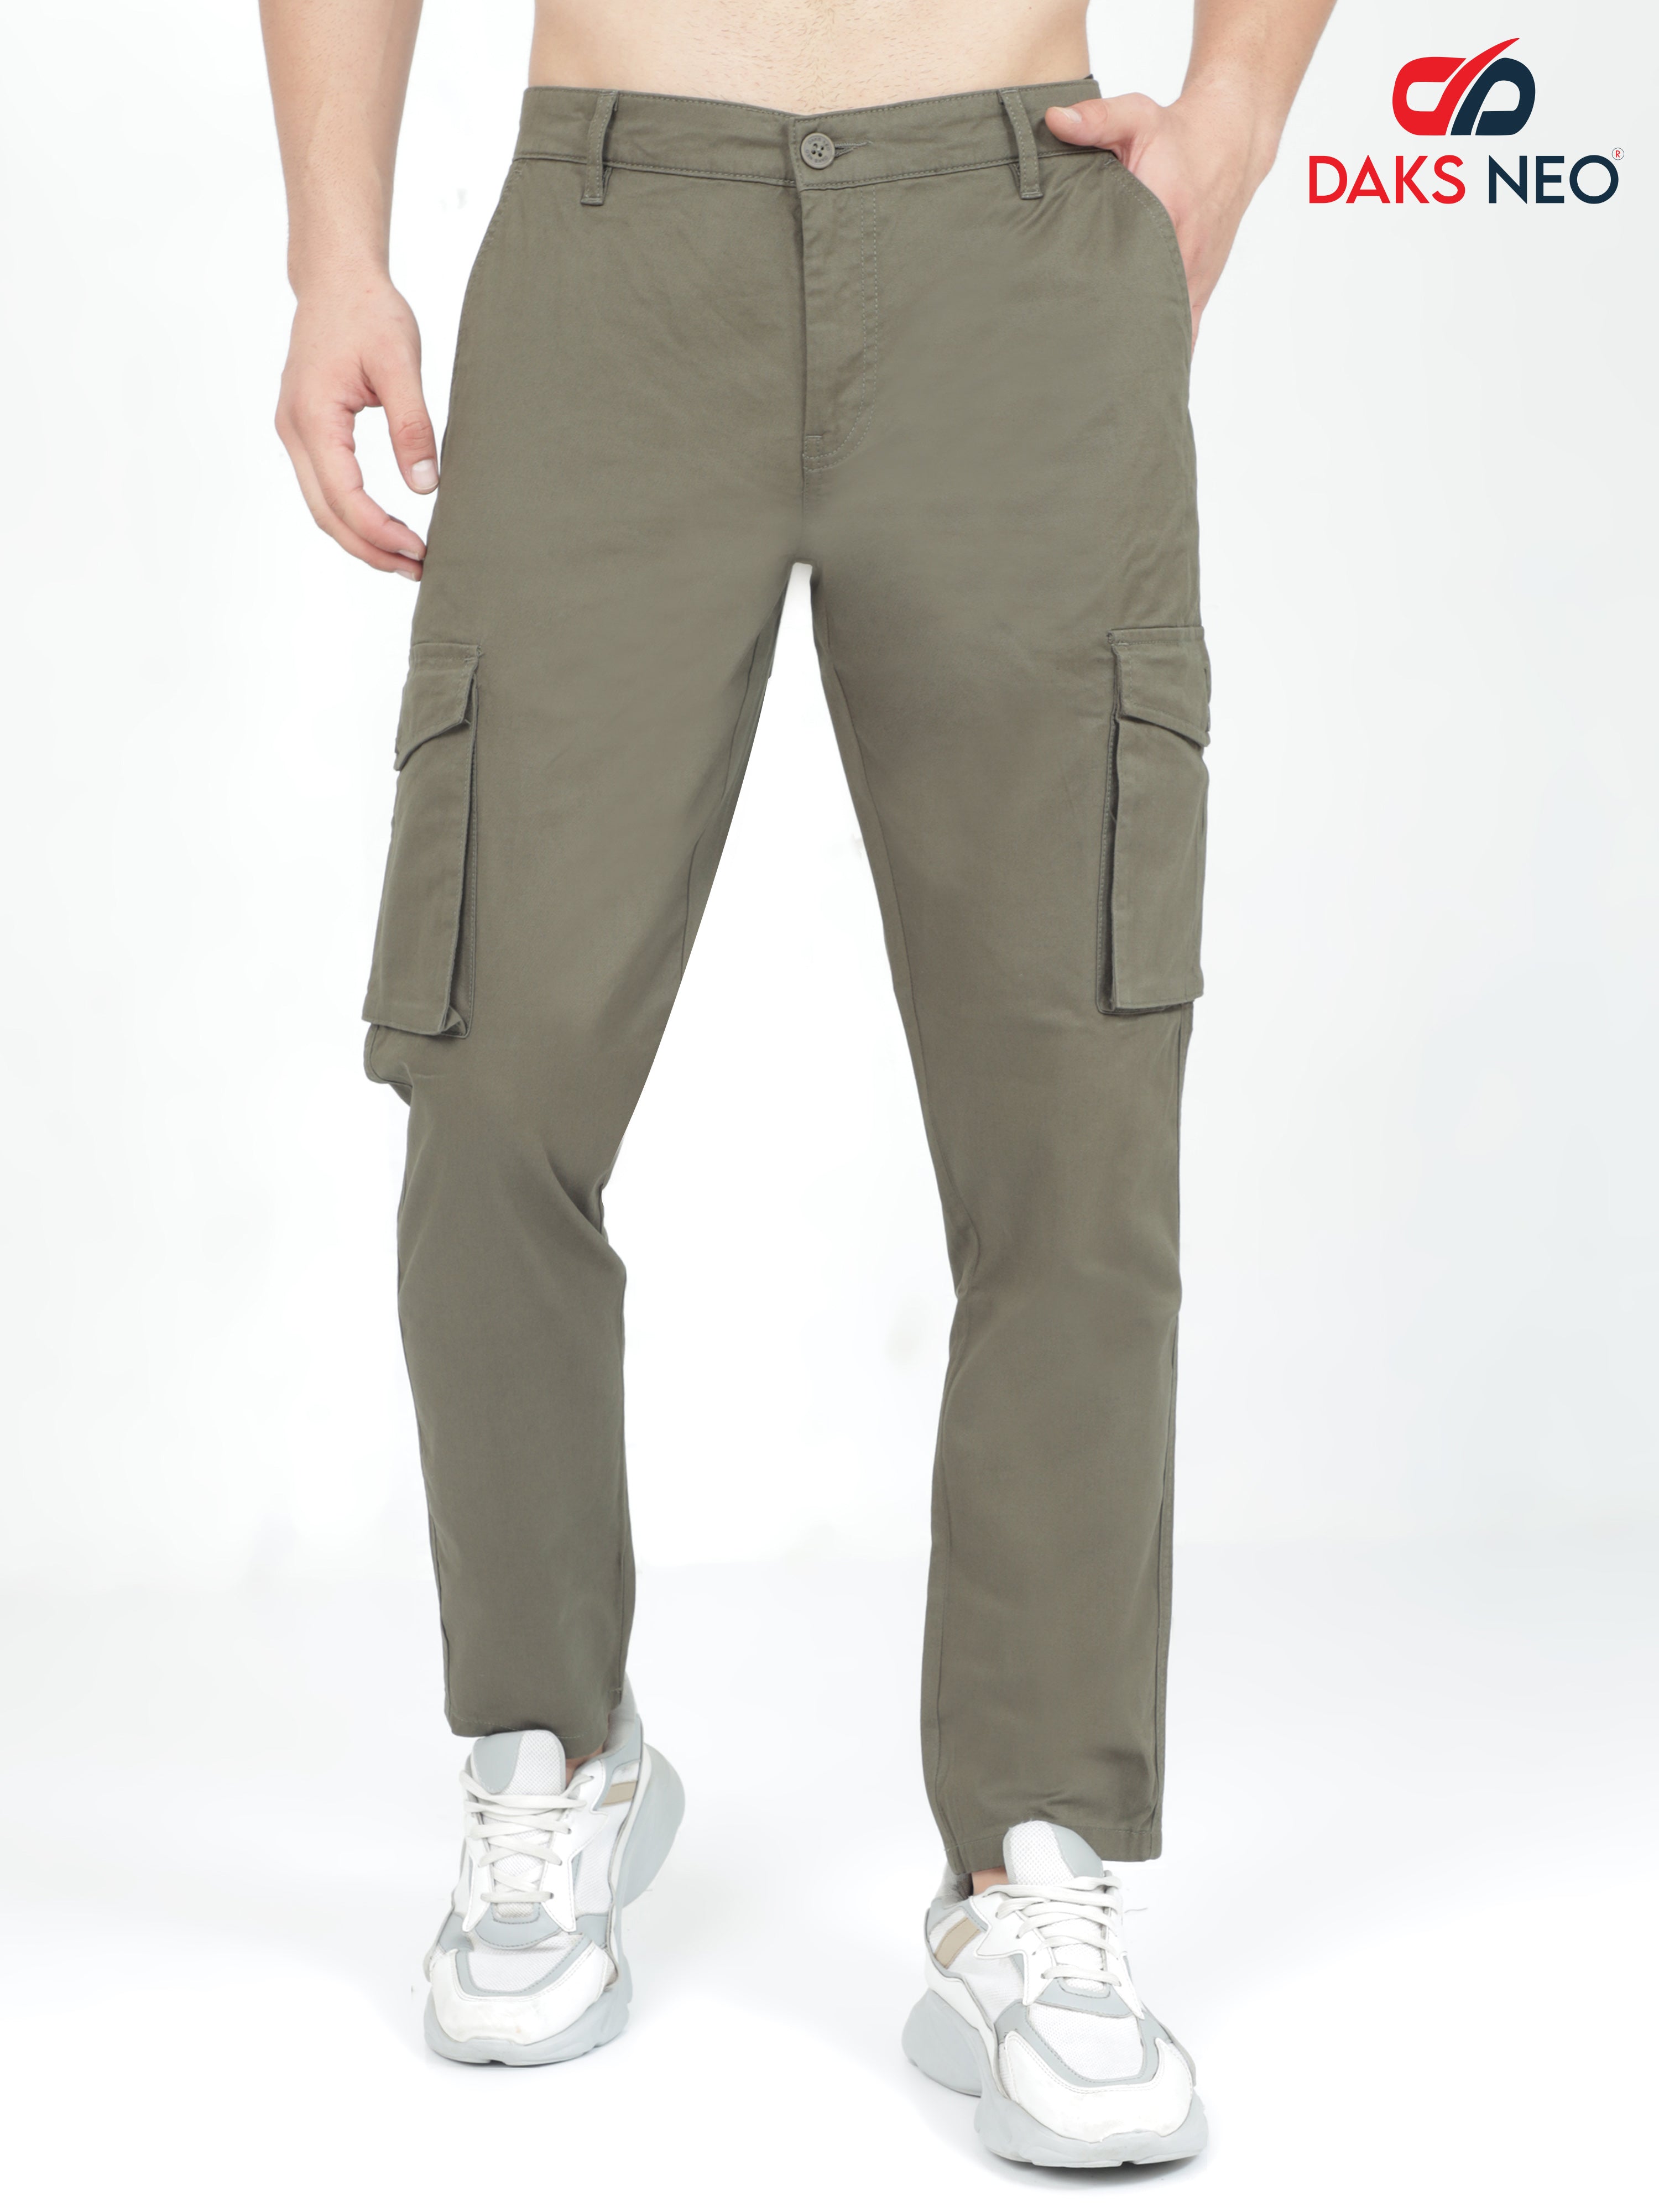 H&M Curvy Fit Cotton Cargo Pants | Hawthorn Mall